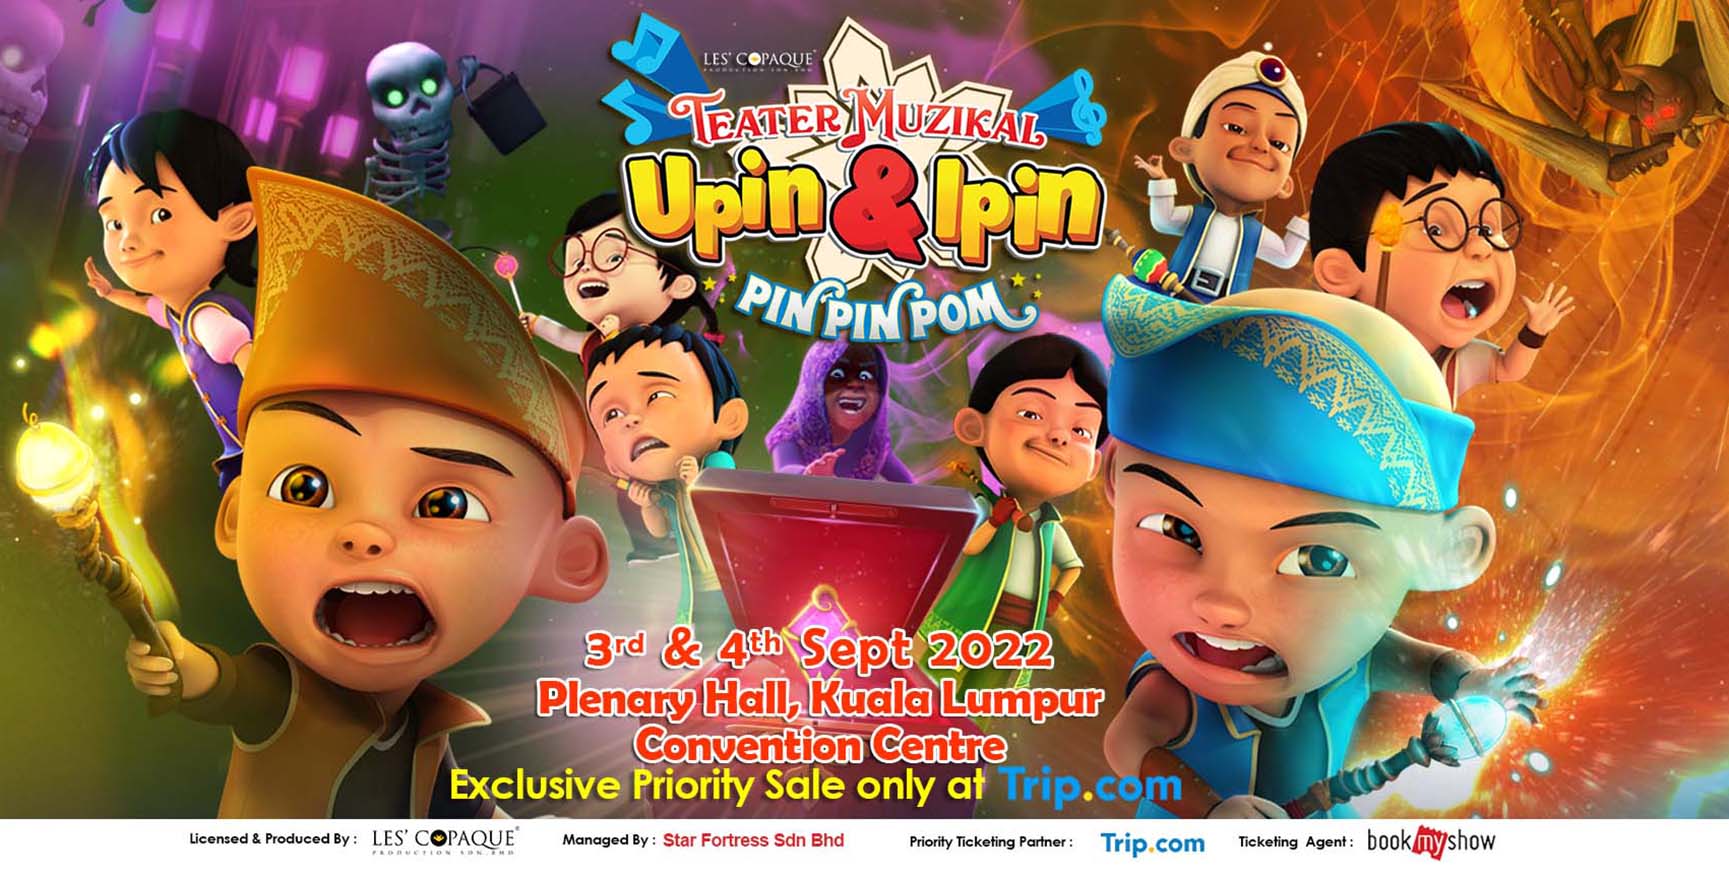 Upin & Ipin Musical Theatre – Pin Pin Pom! @ Plenary Hall, Kuala Lumpur Convention Centre